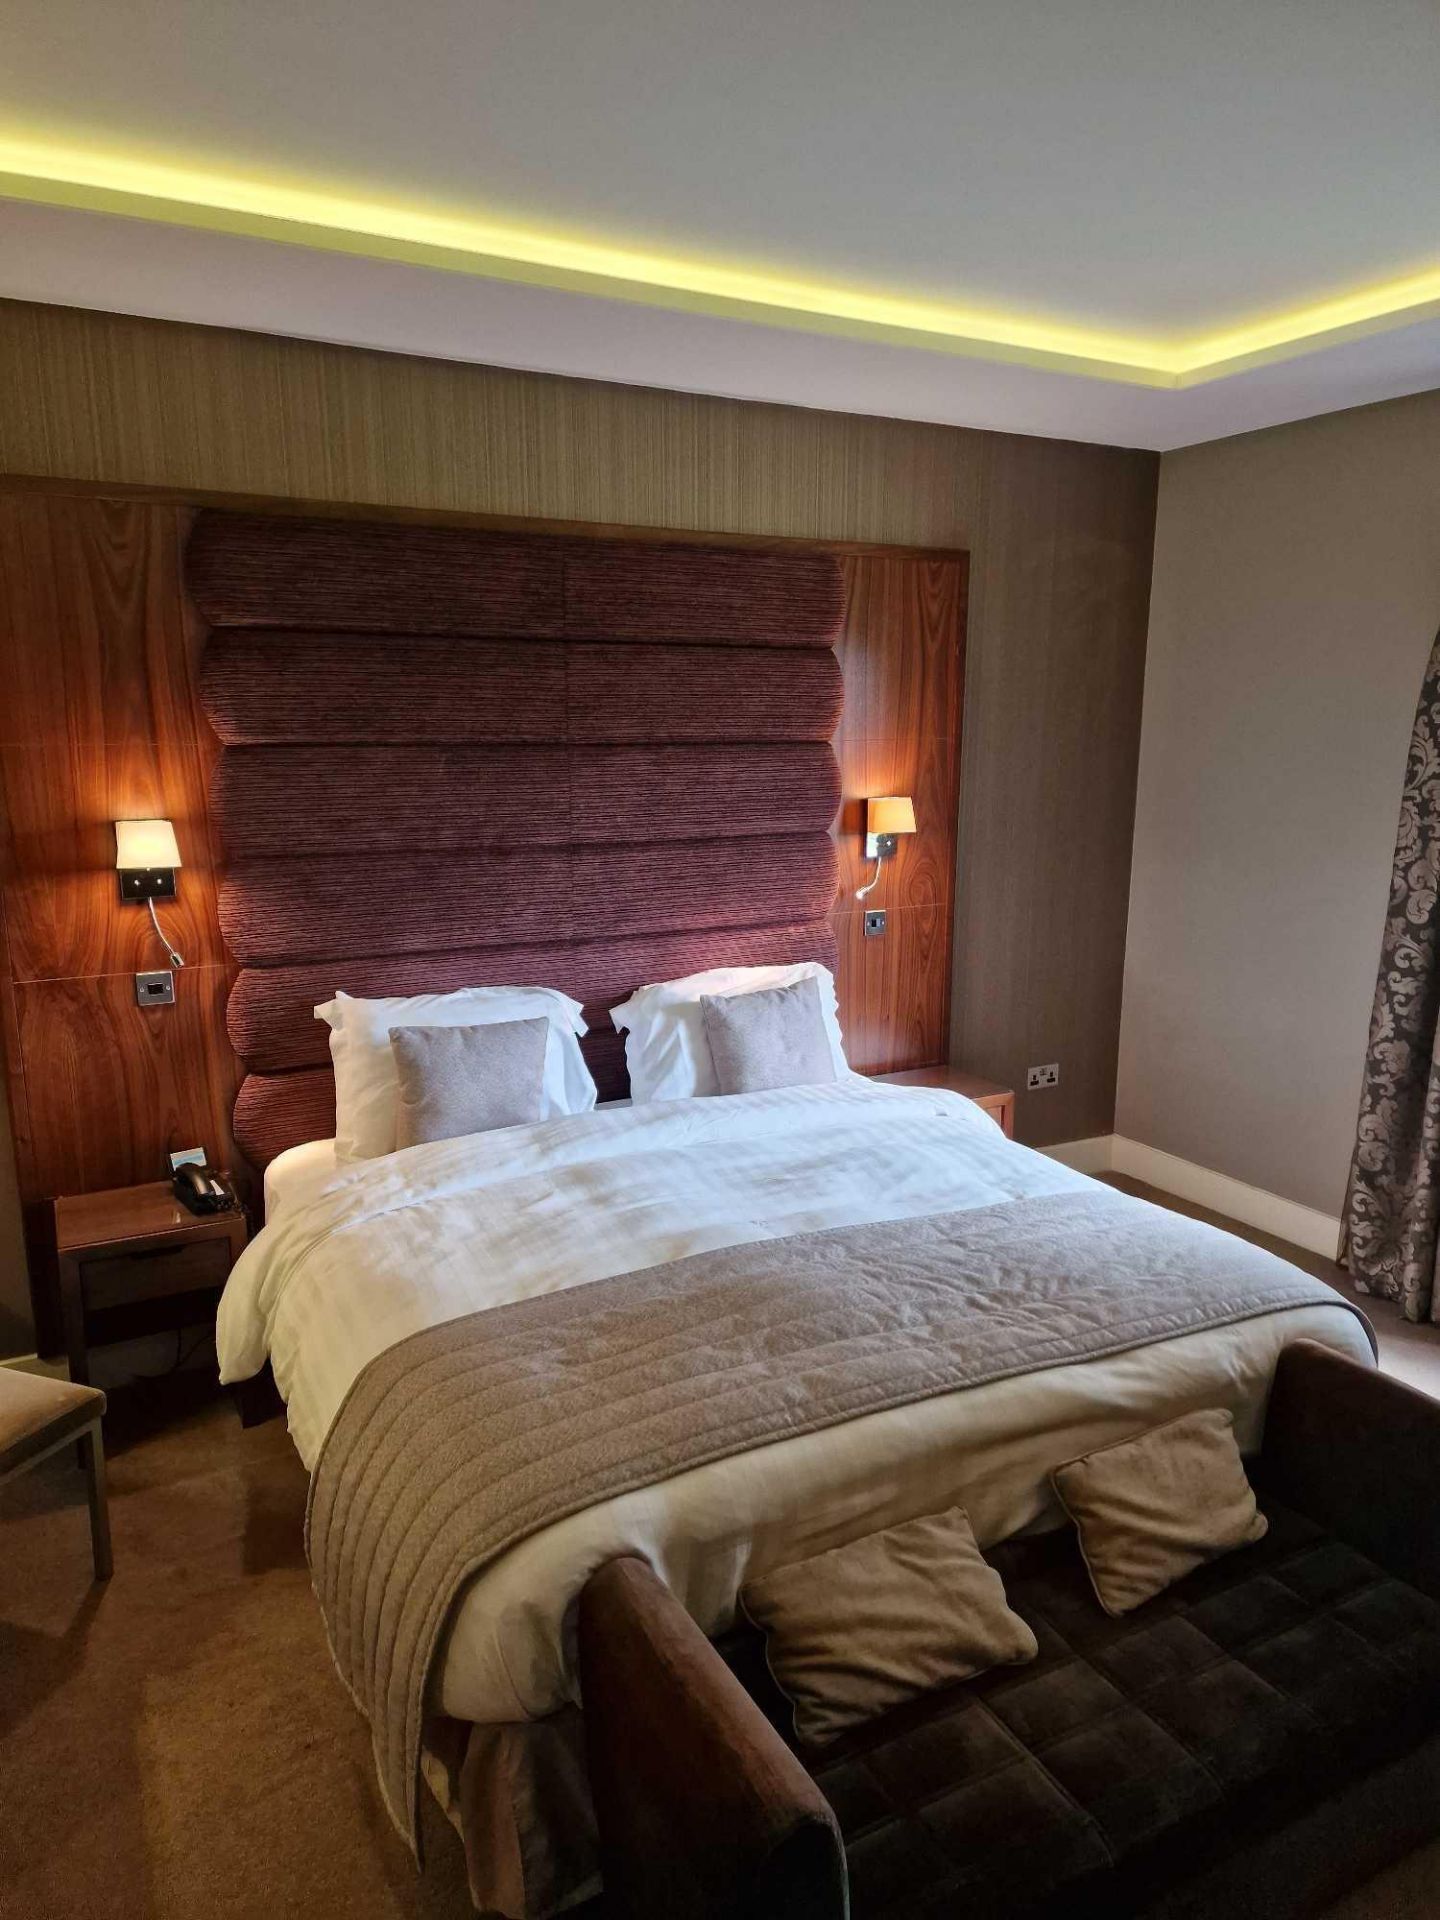 Hypnos Superking 180 x 200cm Zip and Link hotel contract bed comprising of mattress divan base - Bild 4 aus 5